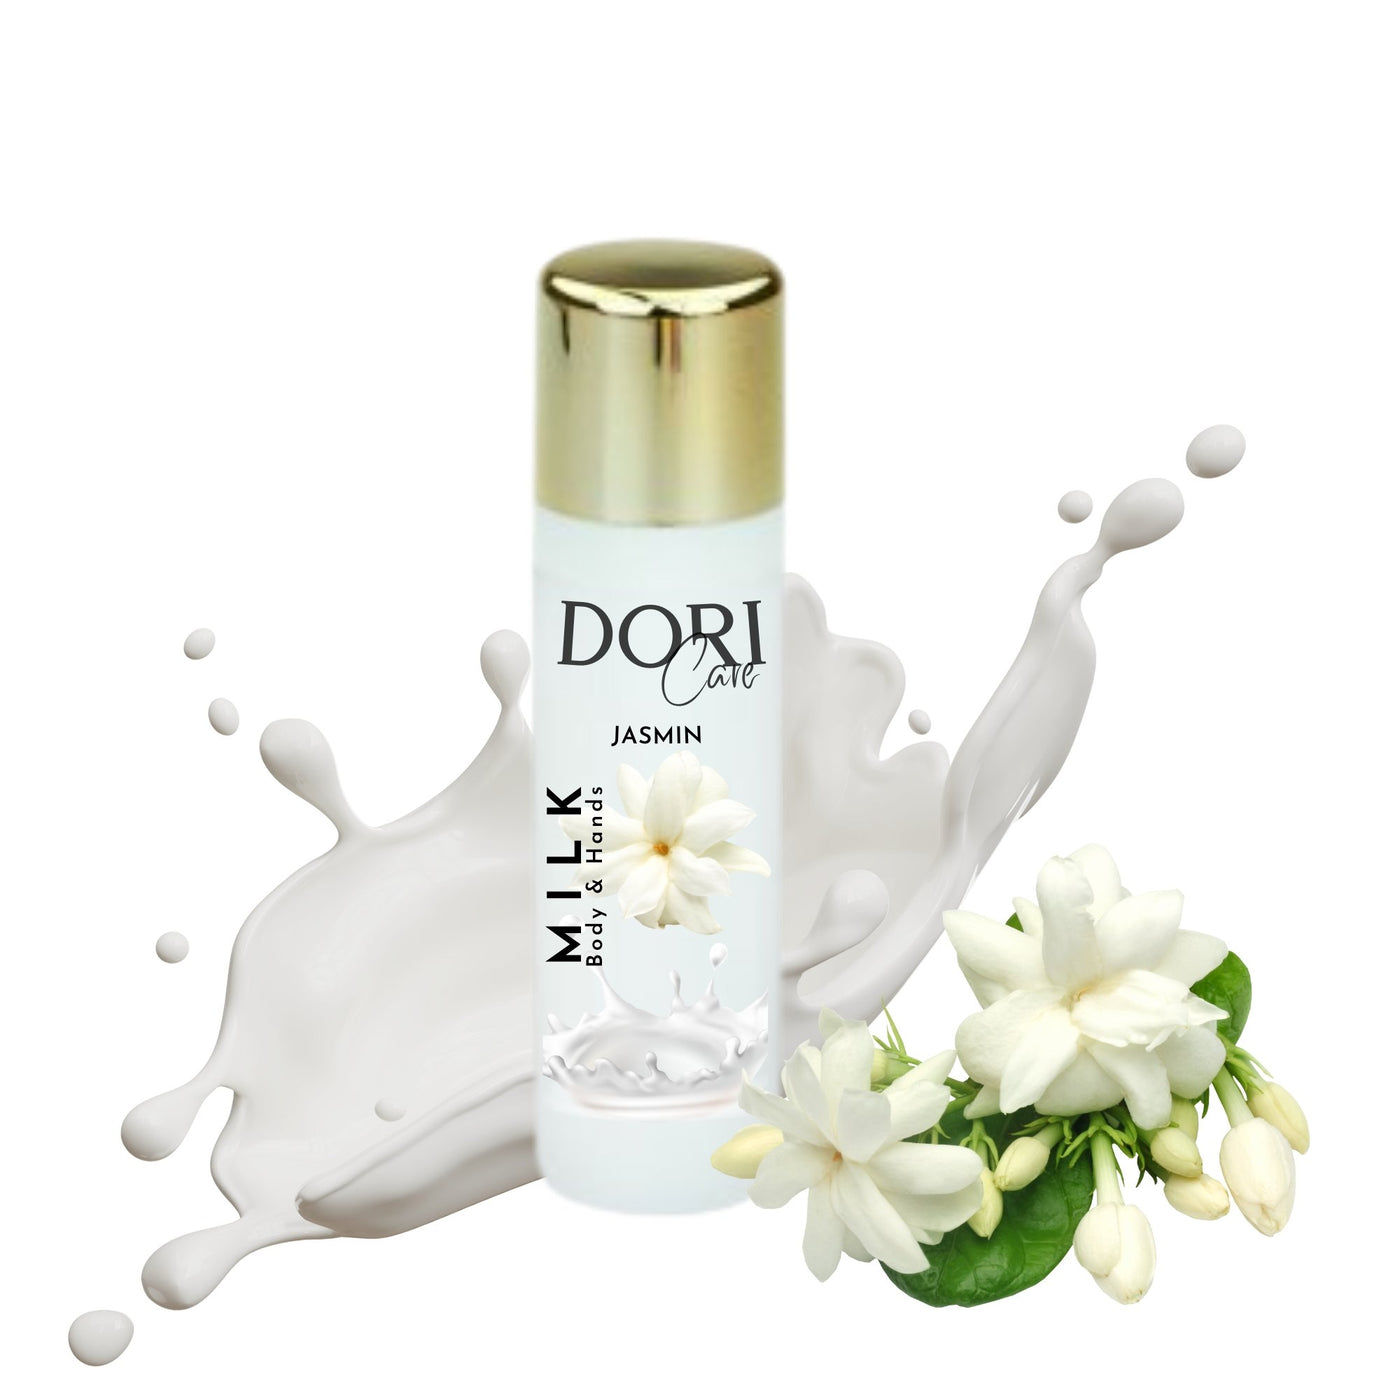 DORI Care - MILK Body & Hands - Jasmin - Doriana Cosmetics GmbH